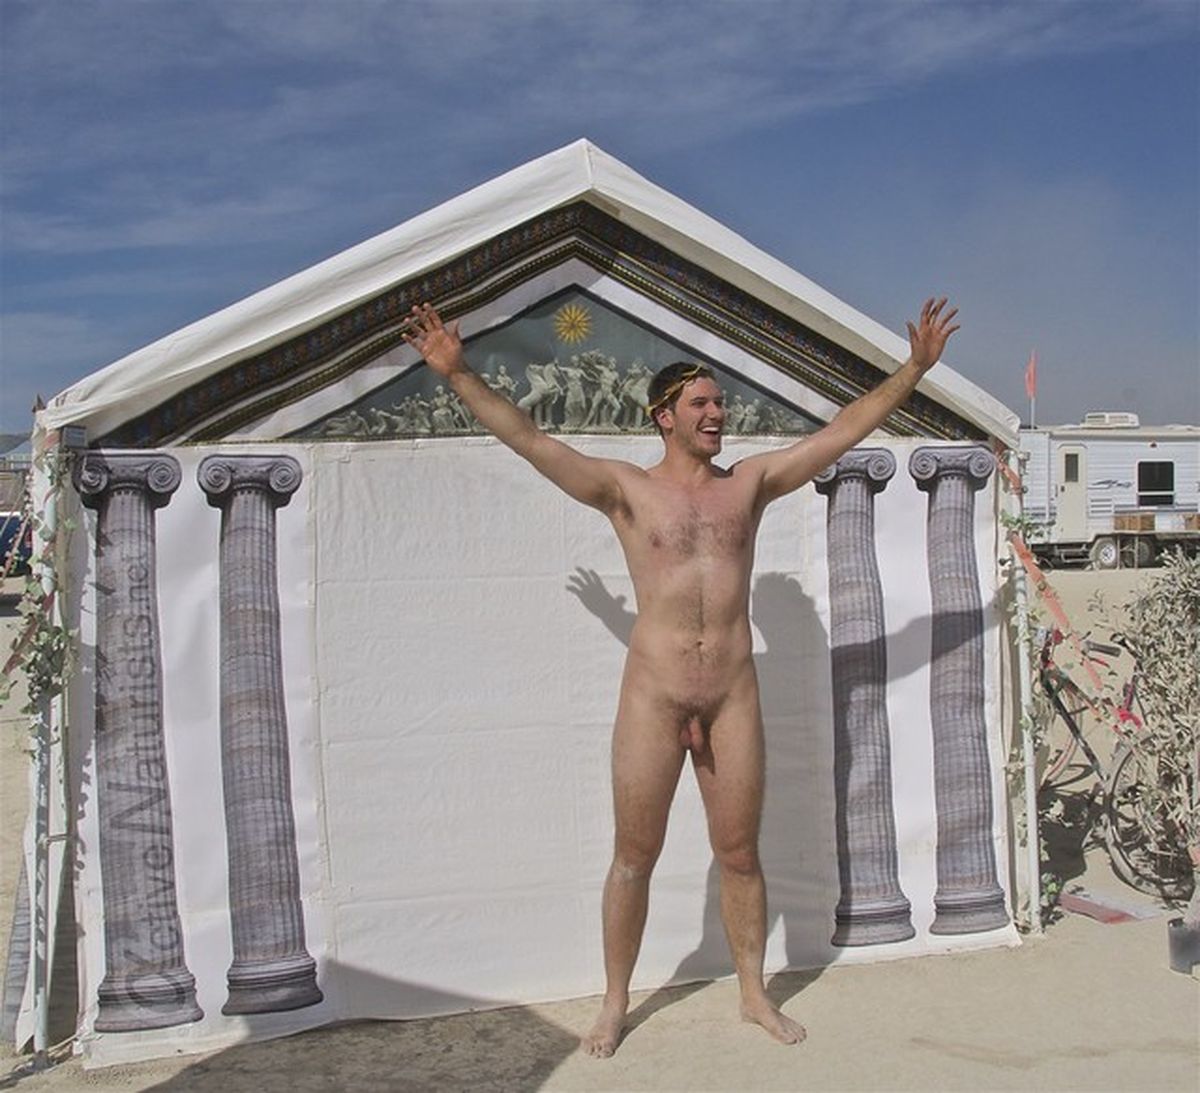 https://www.nudismlife.com/galleries/public_nudity/burning_man/active_naturists/active_naturists_035.jpg